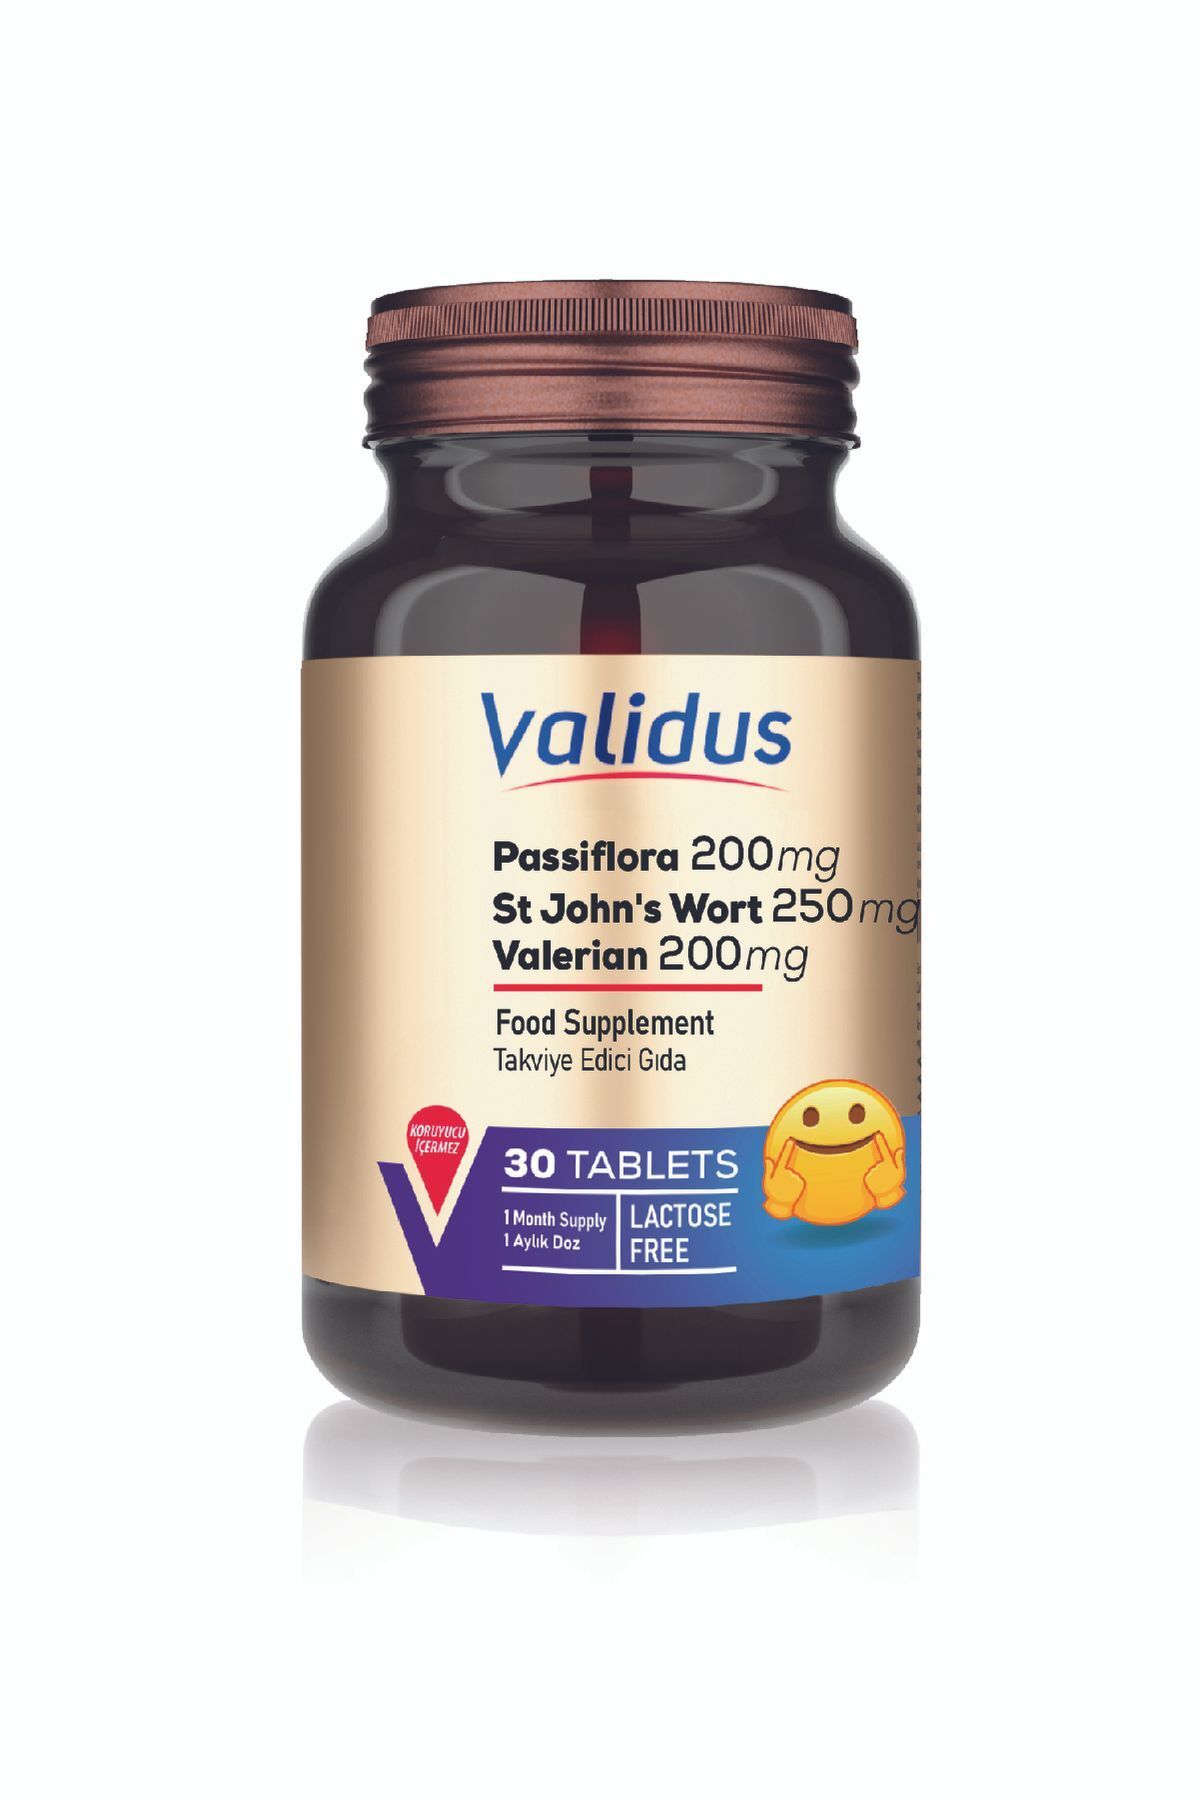 Validus Passiflora Tablet